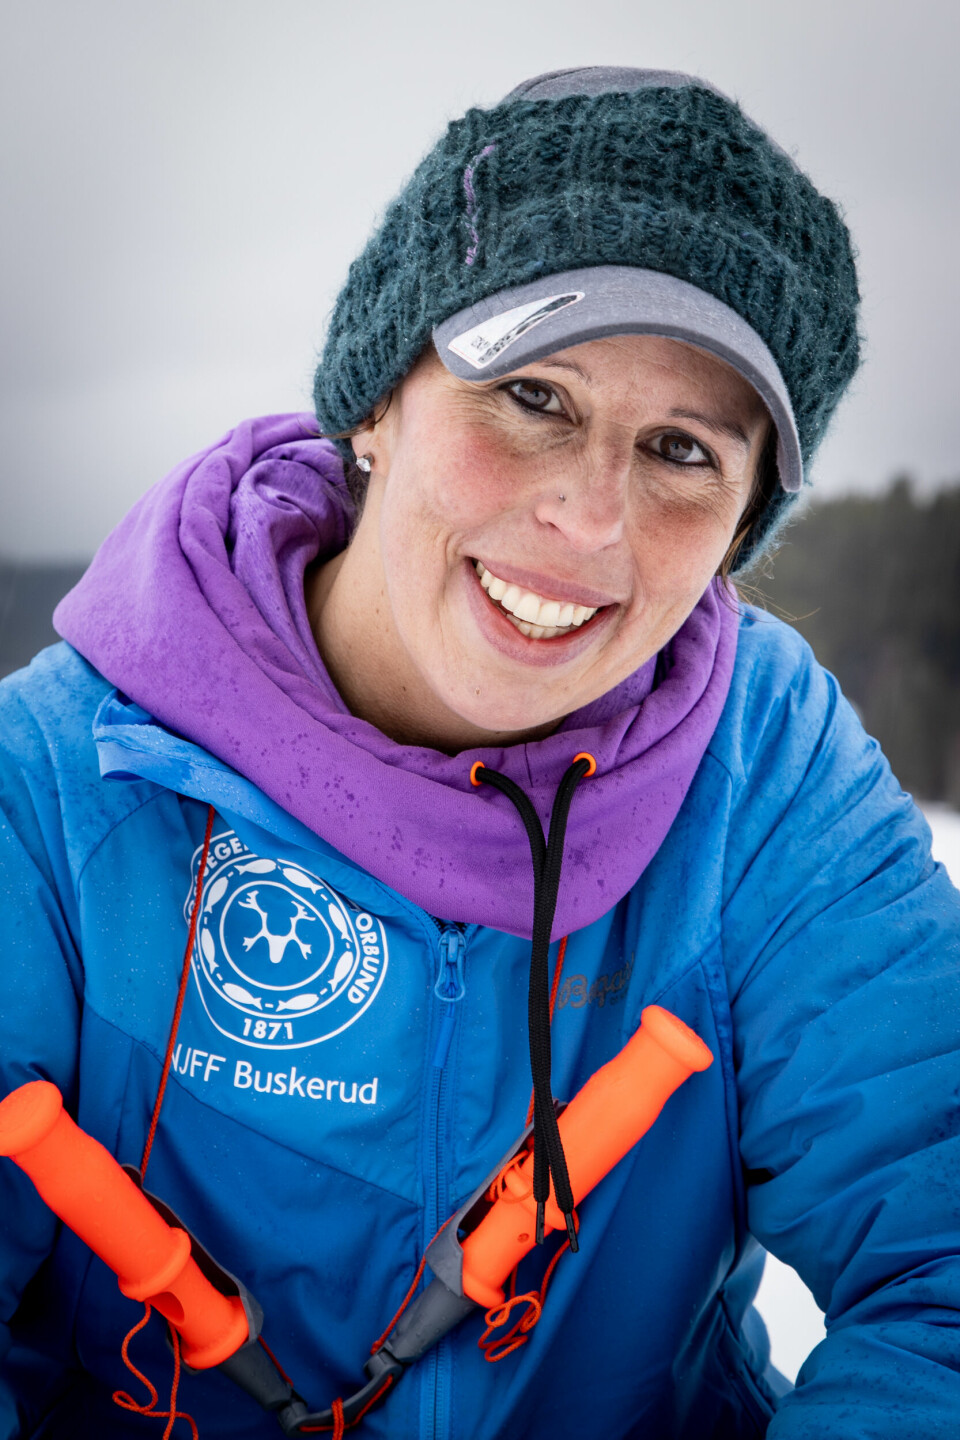 Sara Hansson er primus motor for «Midtfylket jakt- og fiskeskole». I 2020 er det planlagt 20 arrangementer.